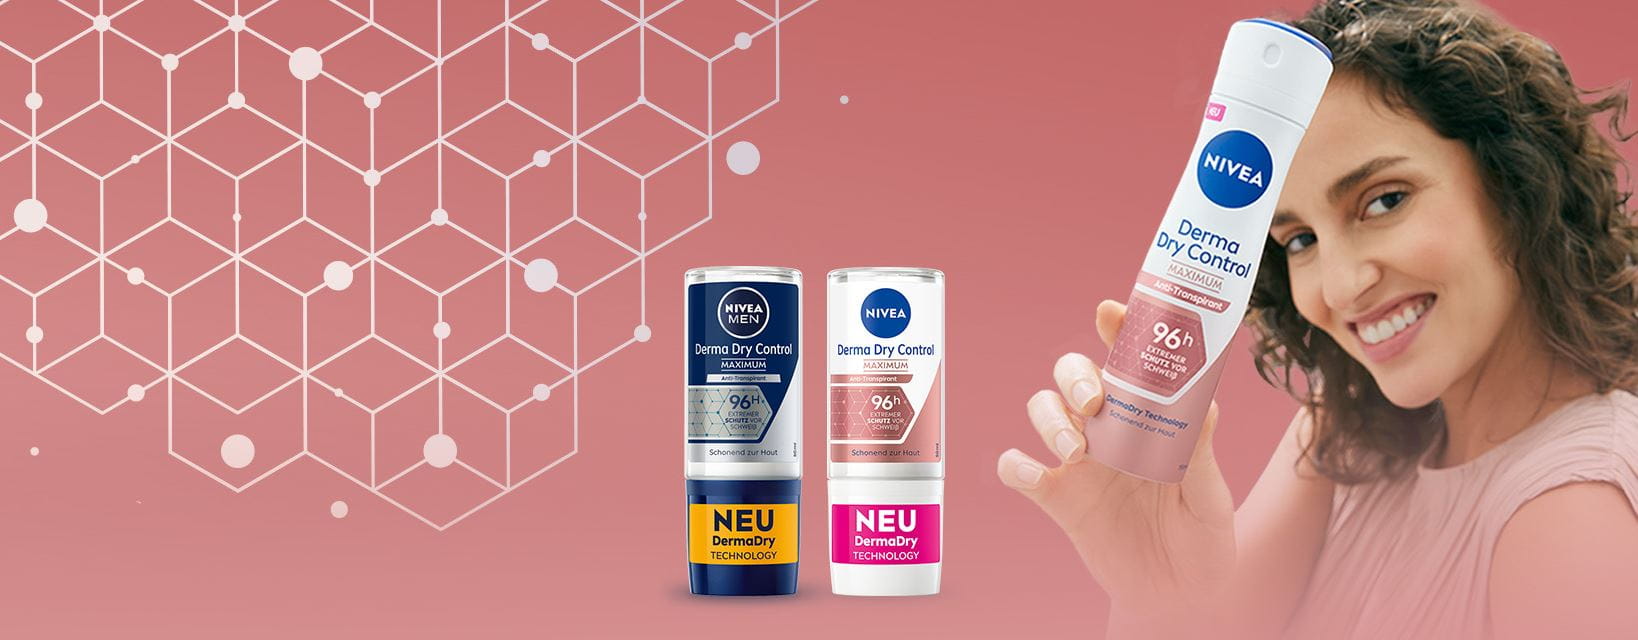 NIVEA Derma Dry Control Produkte